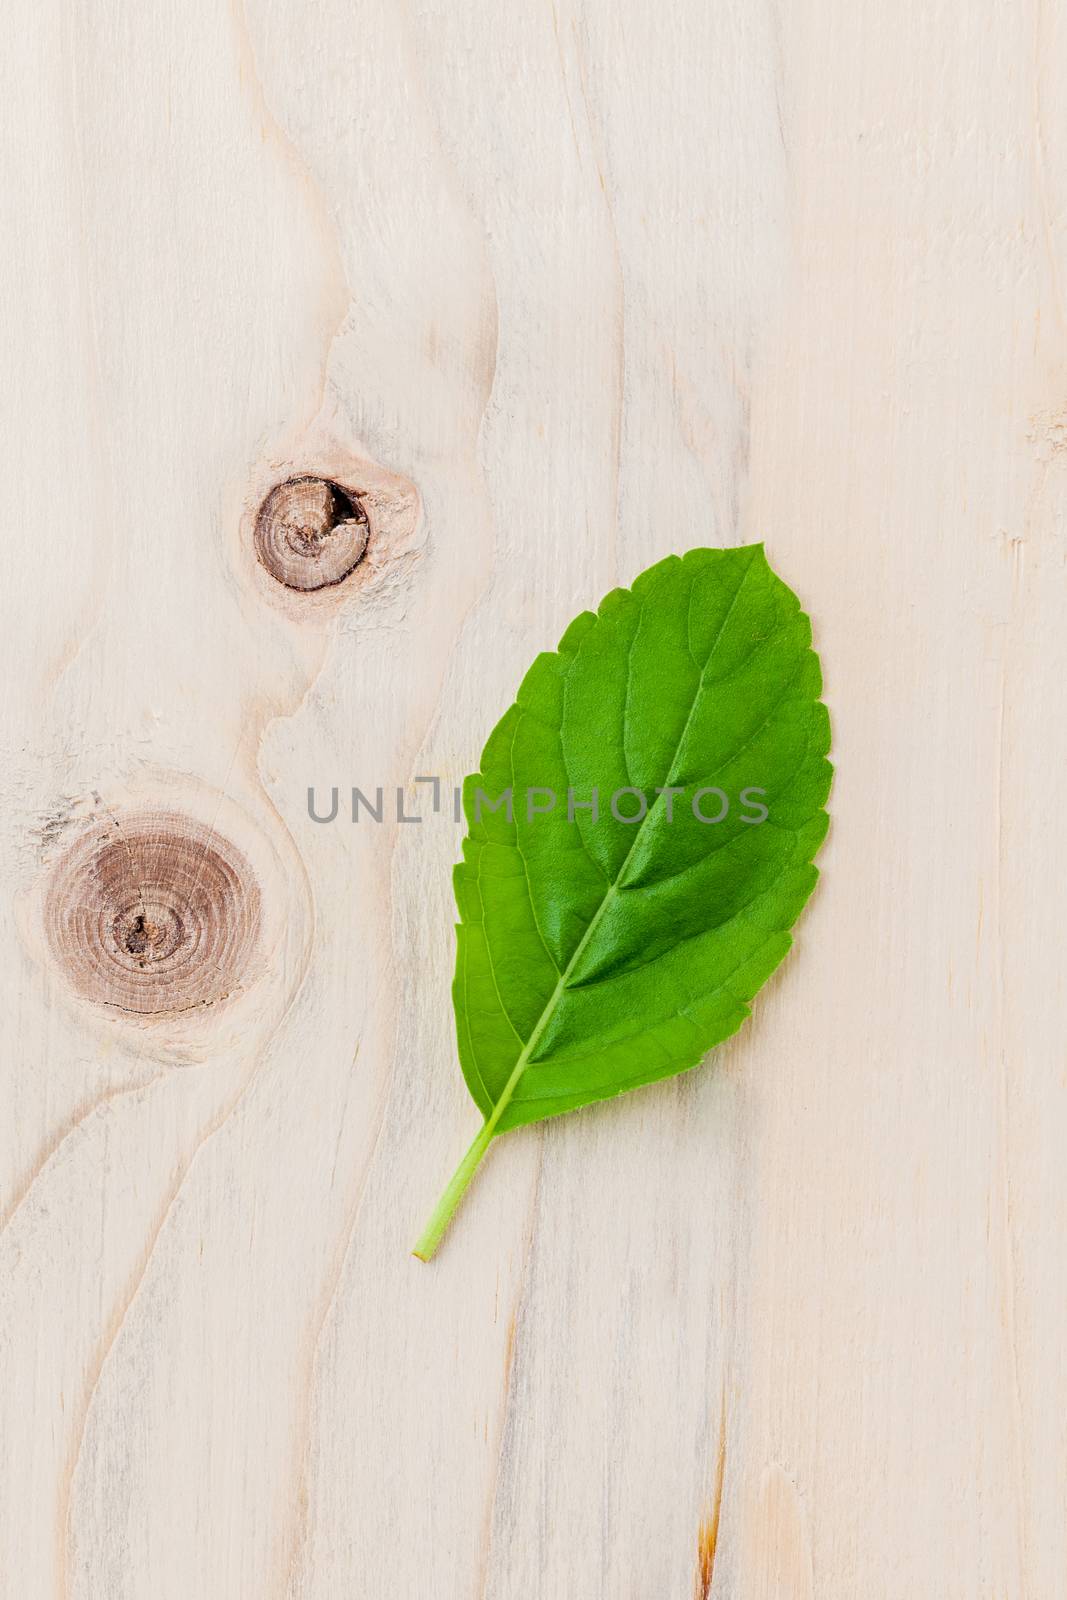 Alternative medicine fresh holy basil leaves on wooden backgroun by kerdkanno